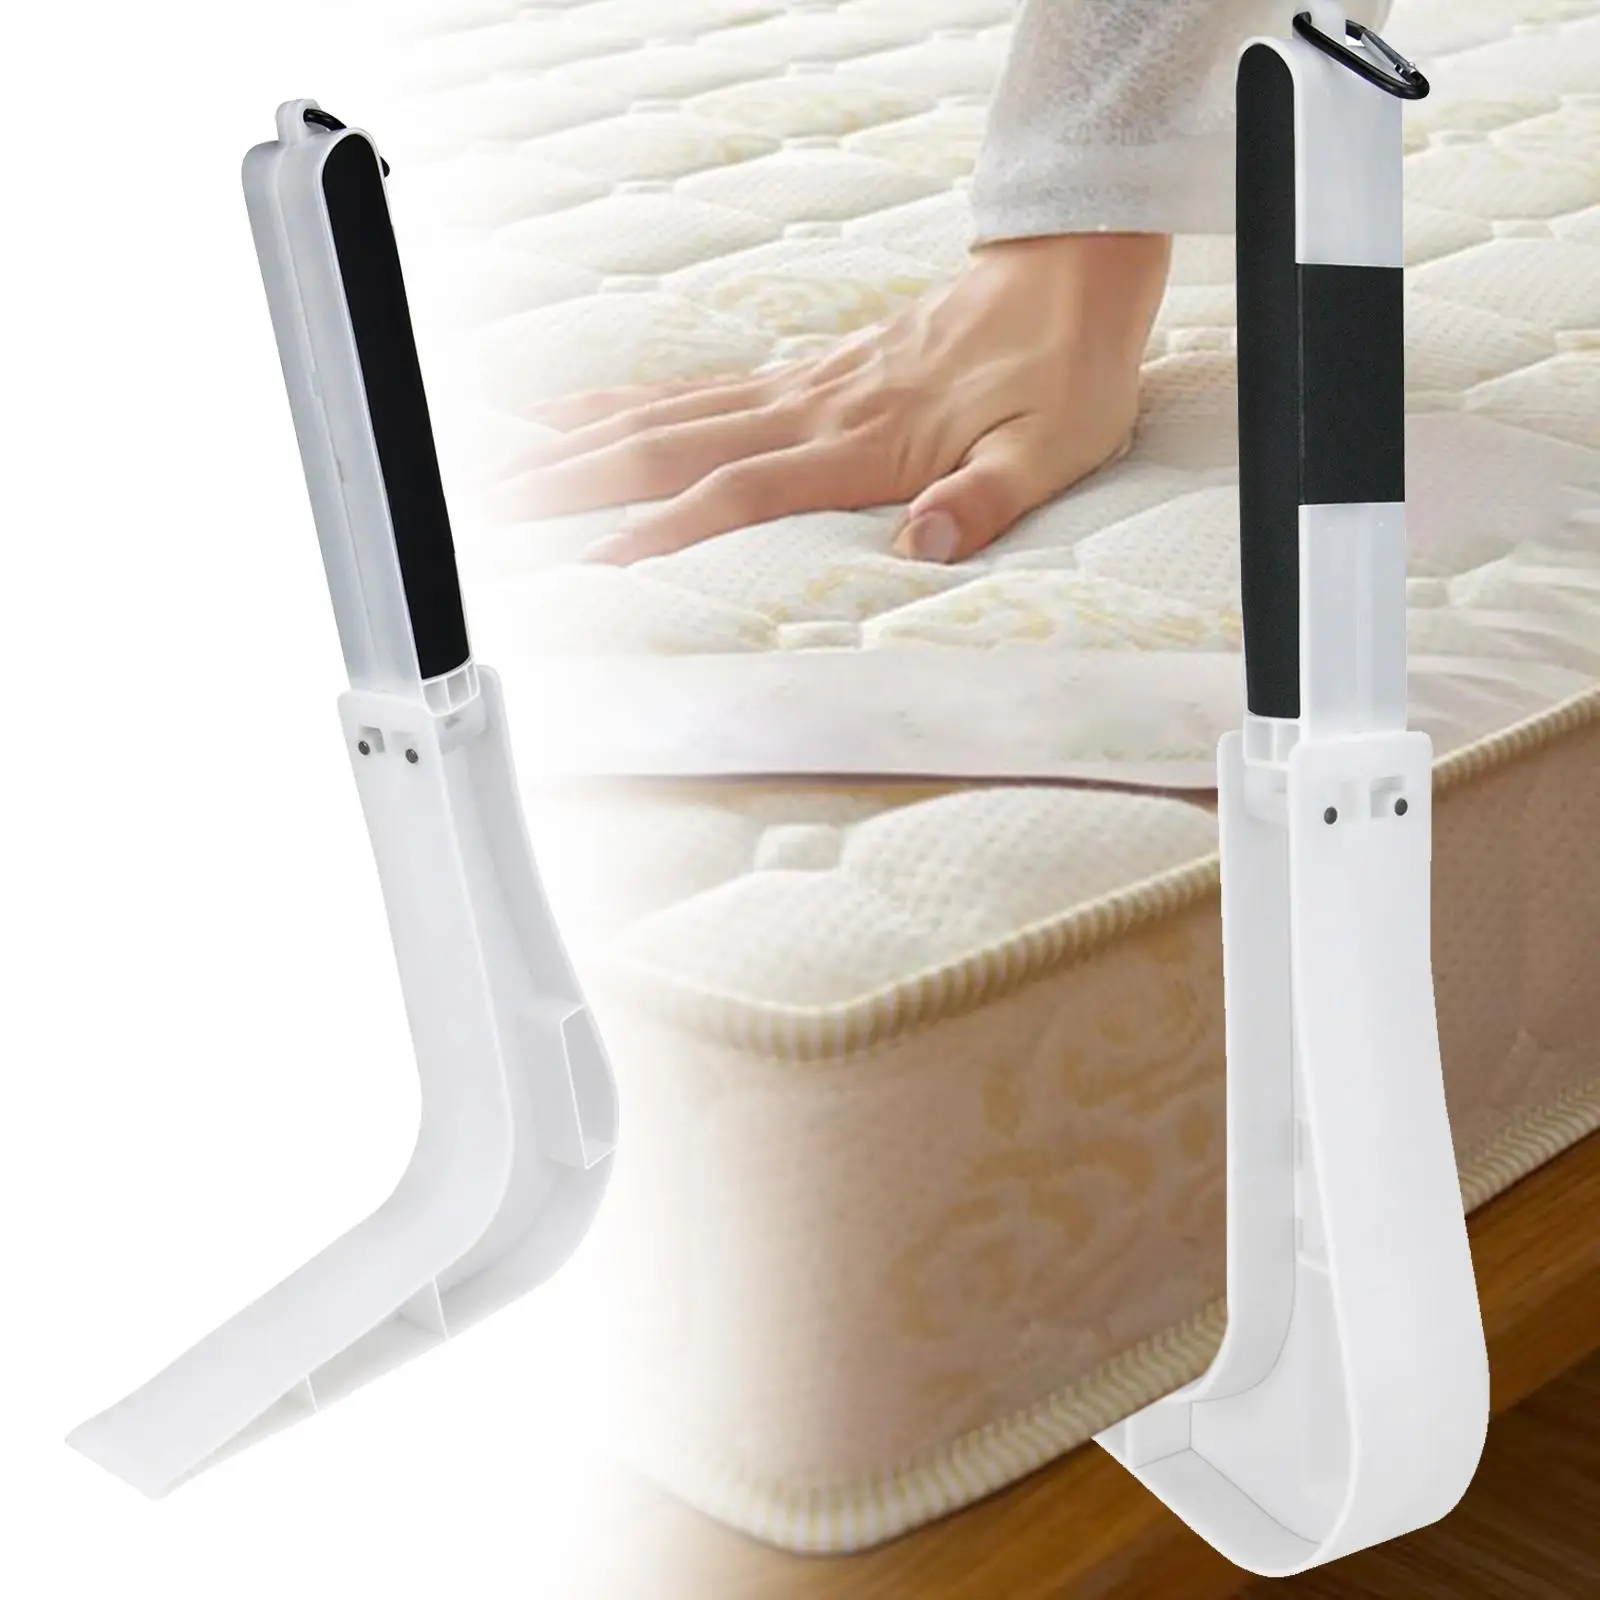 Mattress Lifter Bed Making Labor Saving Bedsheet Change Helper Portable Household for Home Dorm Changing Sheets Bedroom